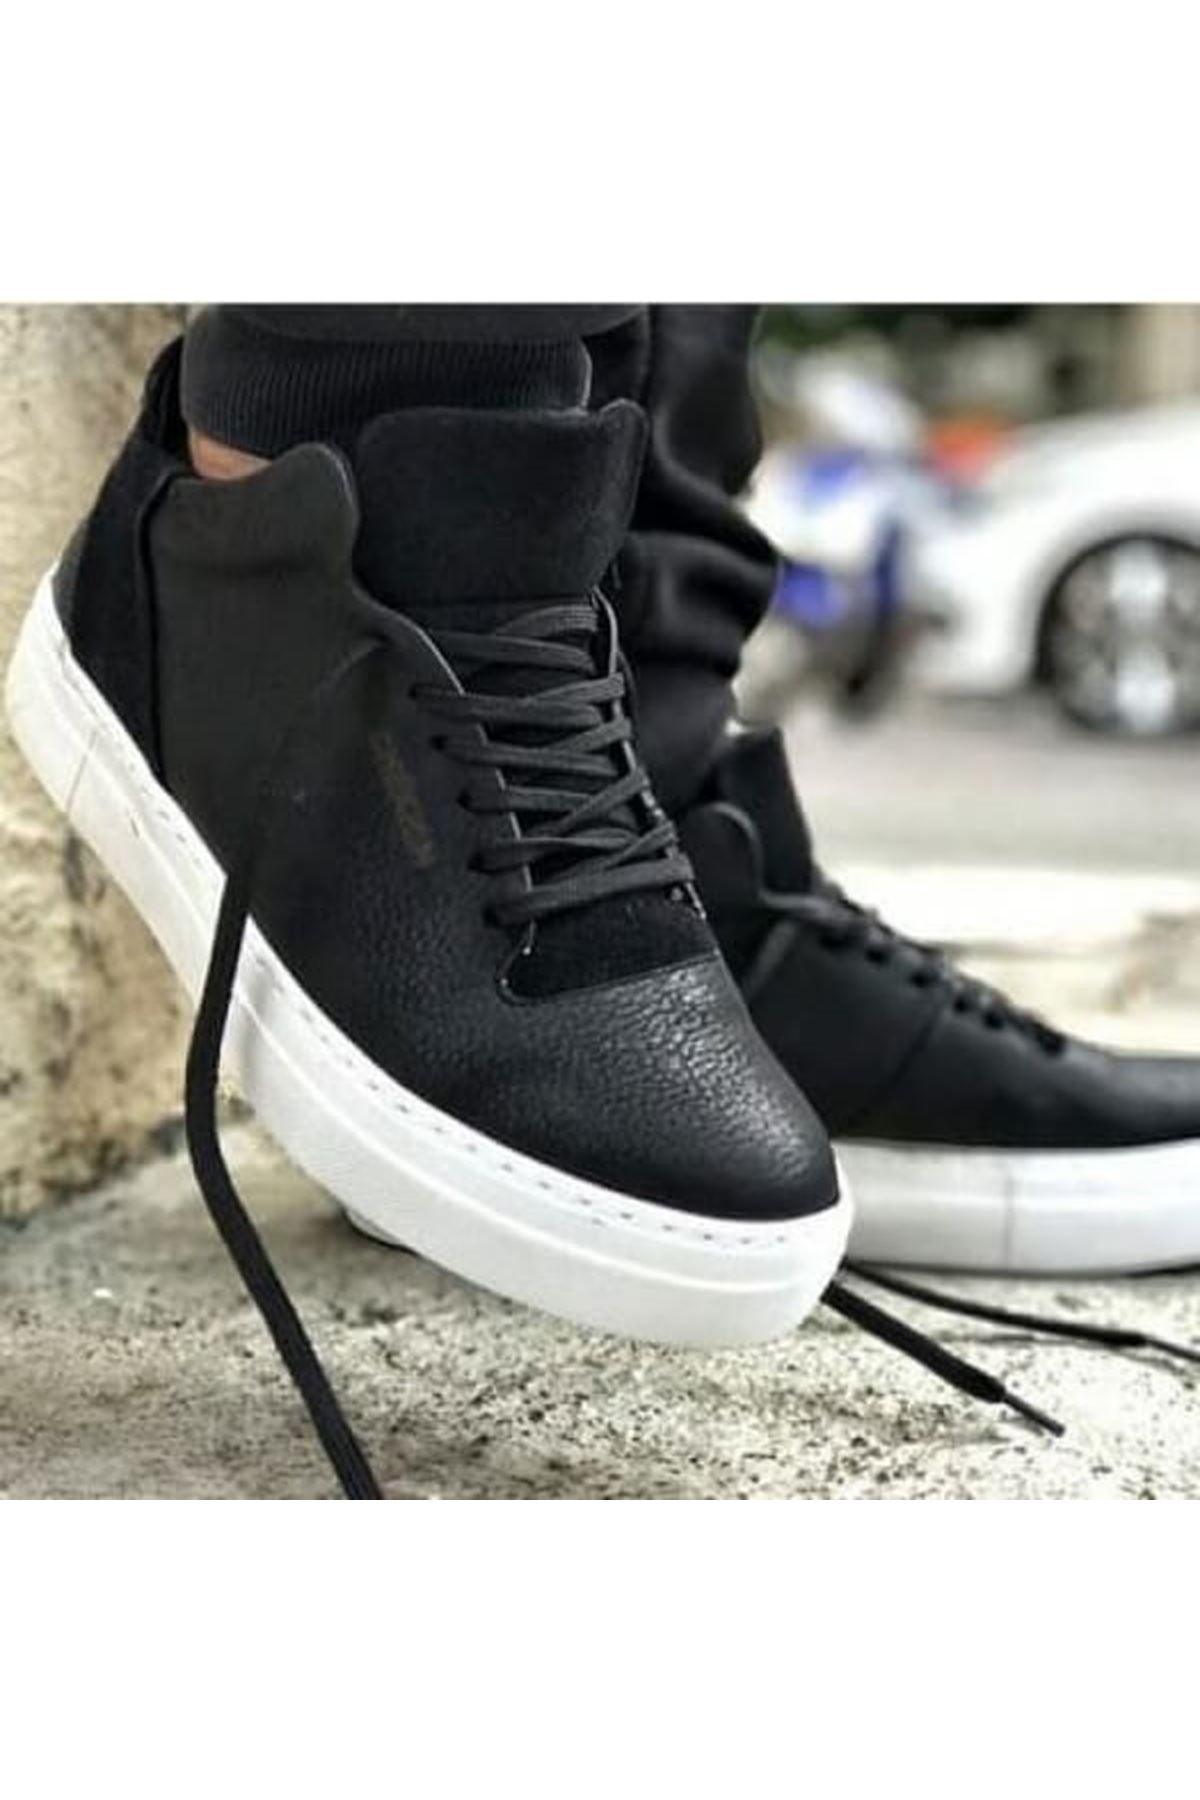 CH003 Men's Black Casual Sneaker Sports Boots - STREET MODE ™